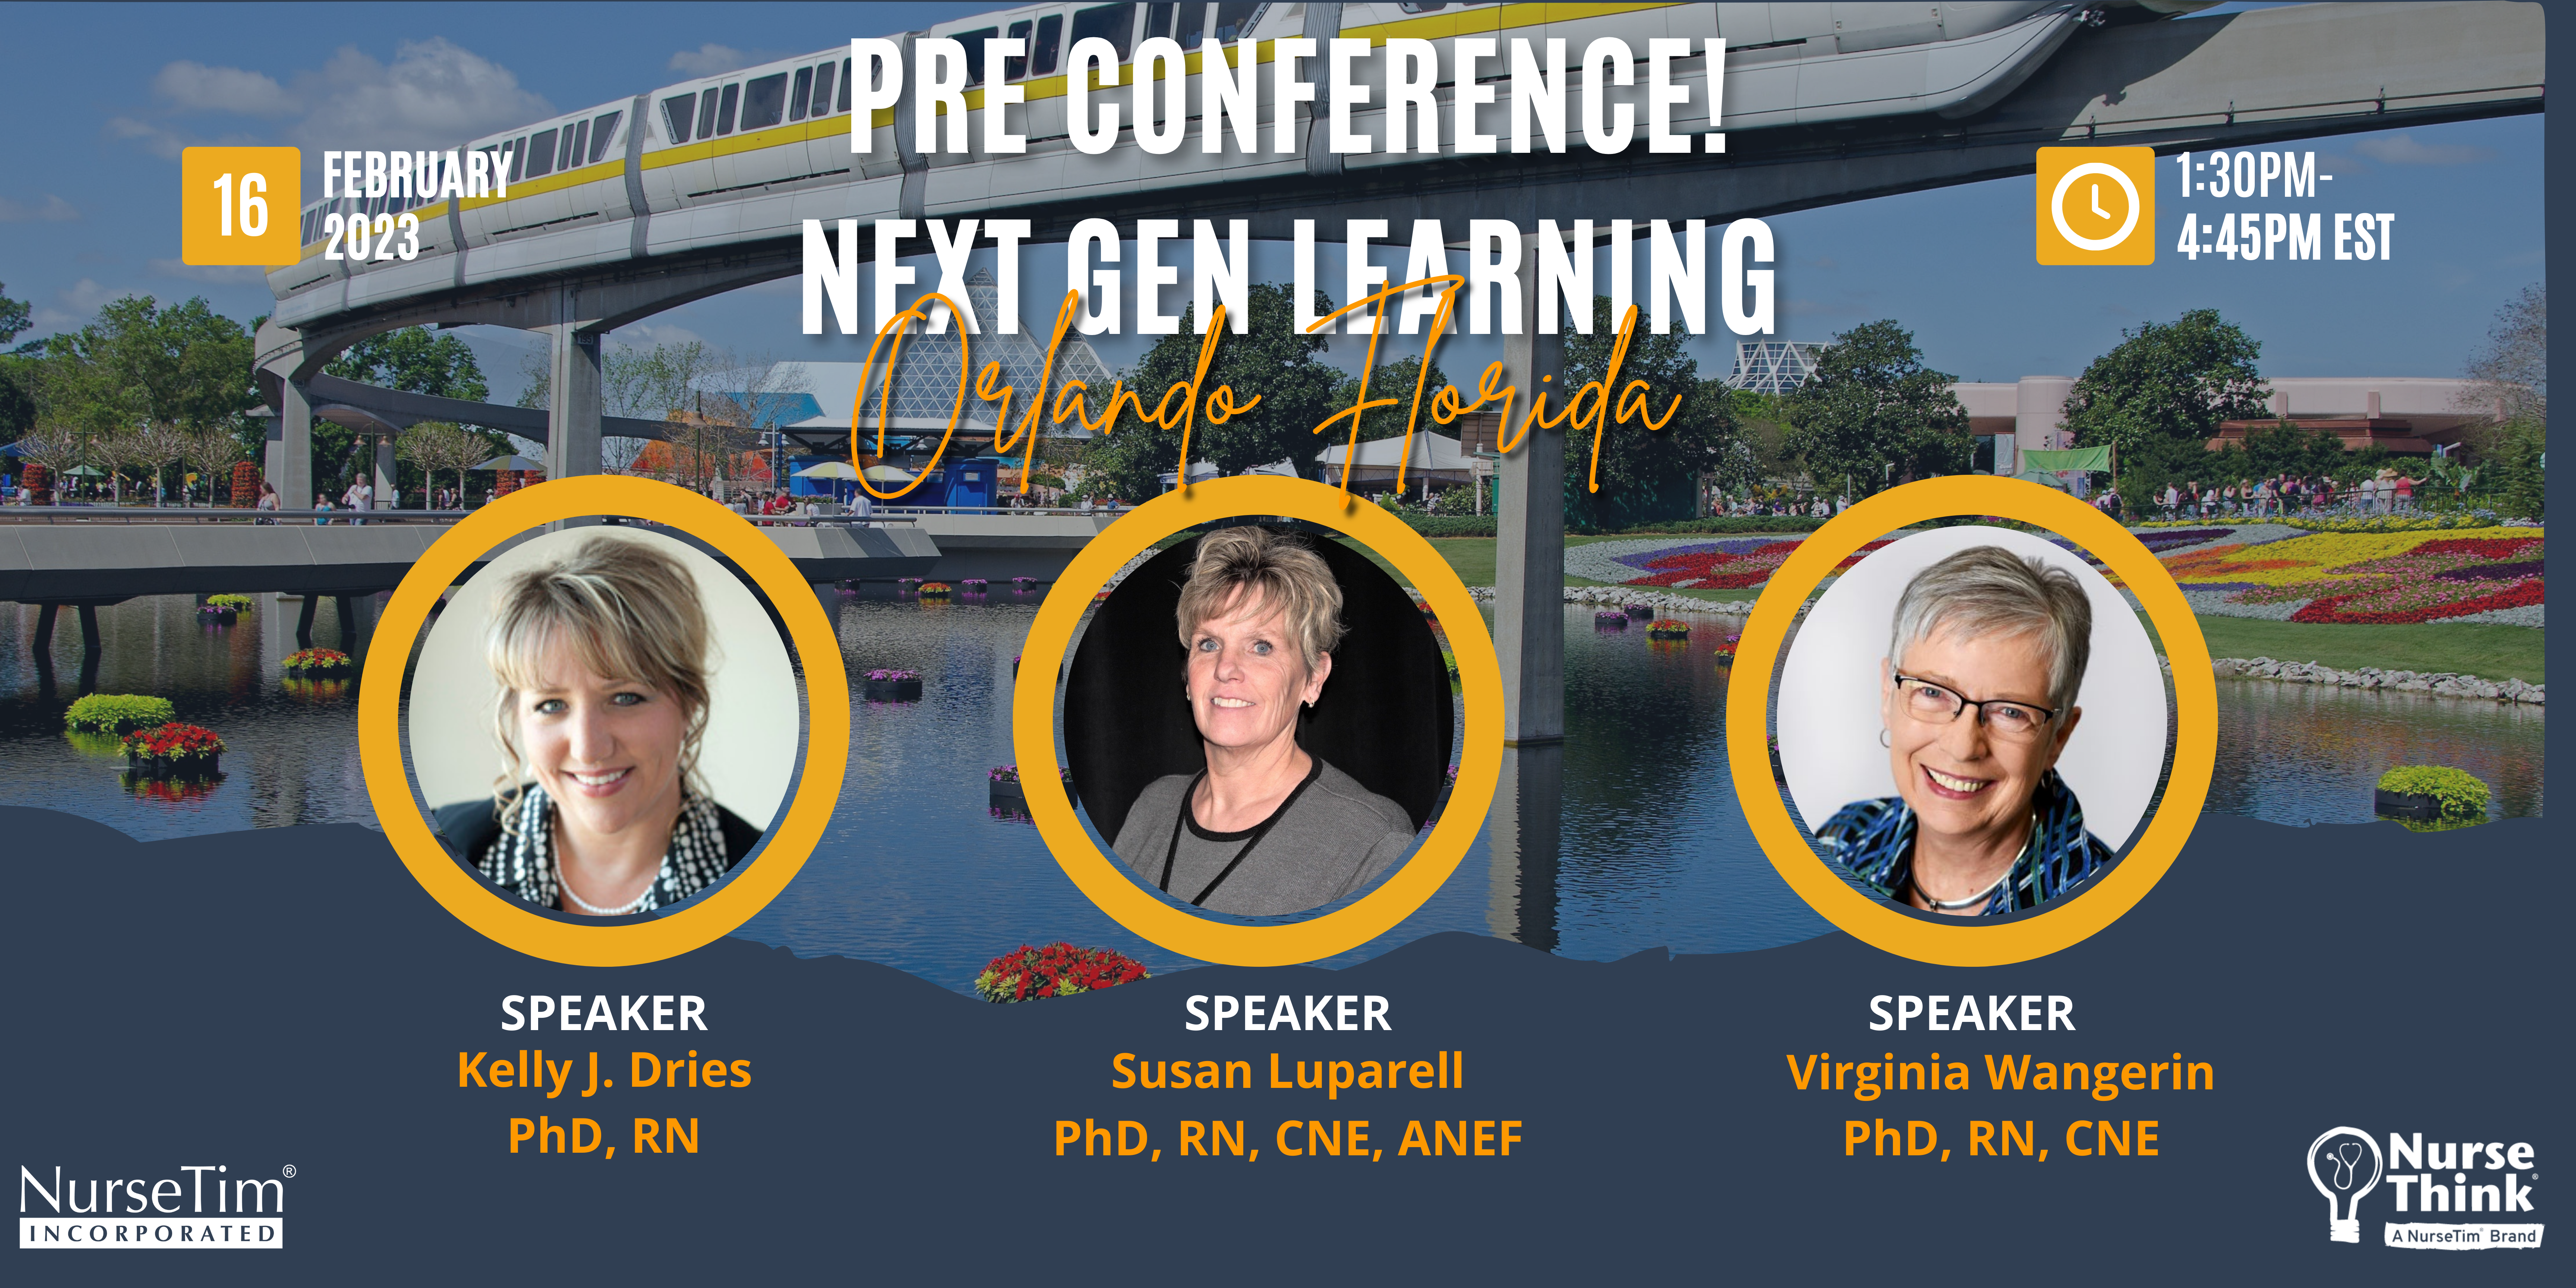 Pre-Conference Next Gen Learning - Orlando Florida, February 16, 2023, 1:30pm-4:45pm EST